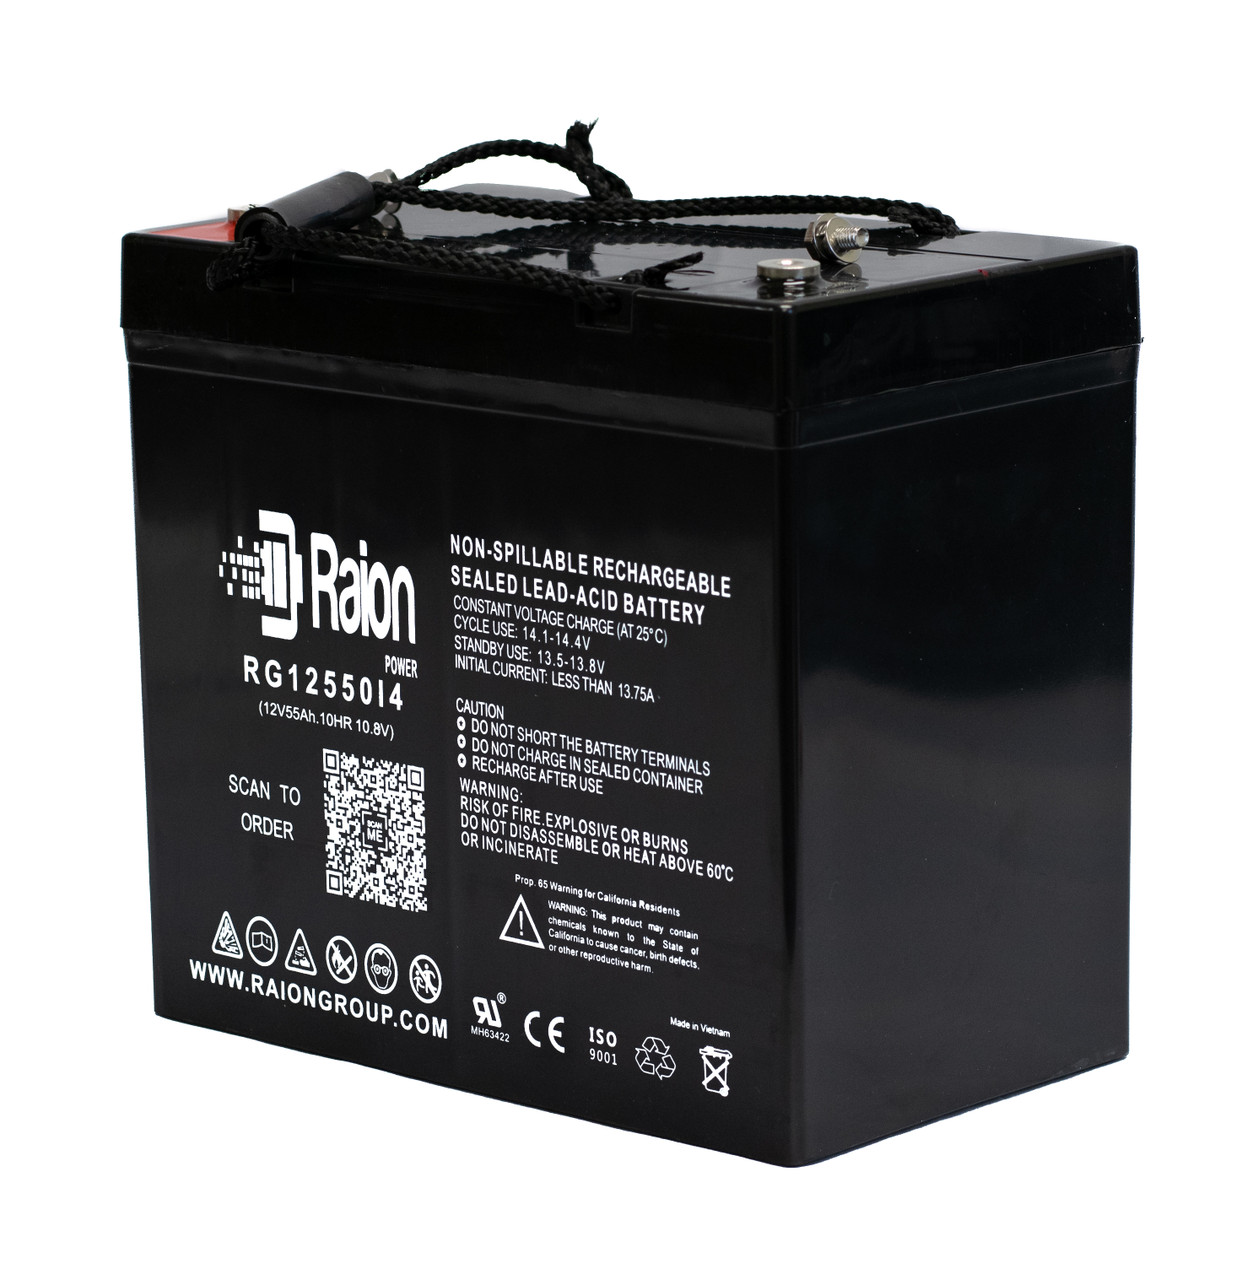 Raion Power Replacement 12V 55Ah Battery for Shimastu NPC55-12 - 1 Pack